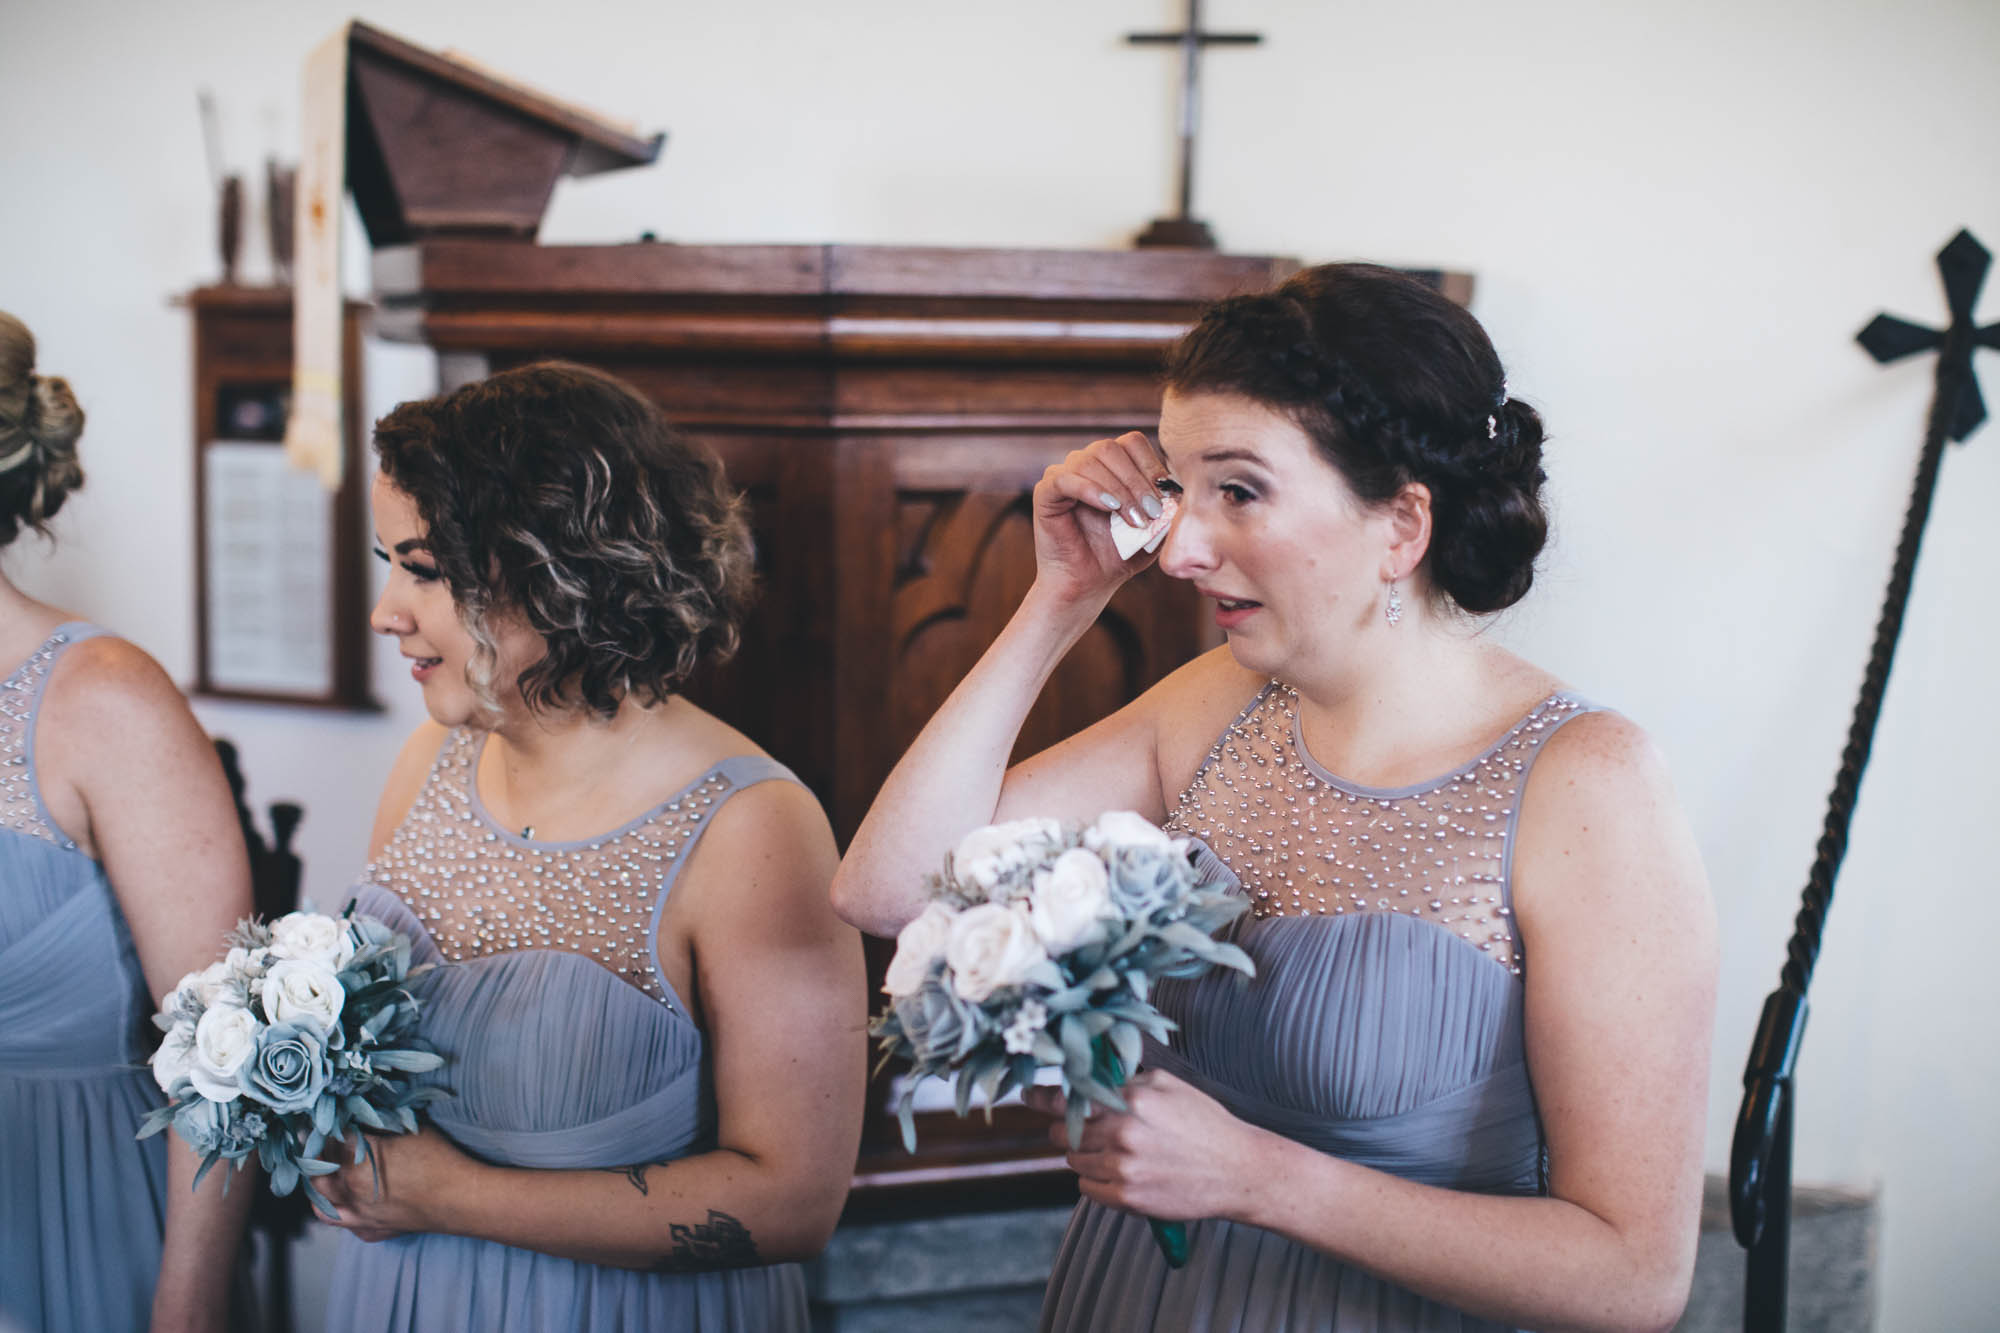 Bridesmaid wipes away tears as she sees her friend walk down the aisle in a church